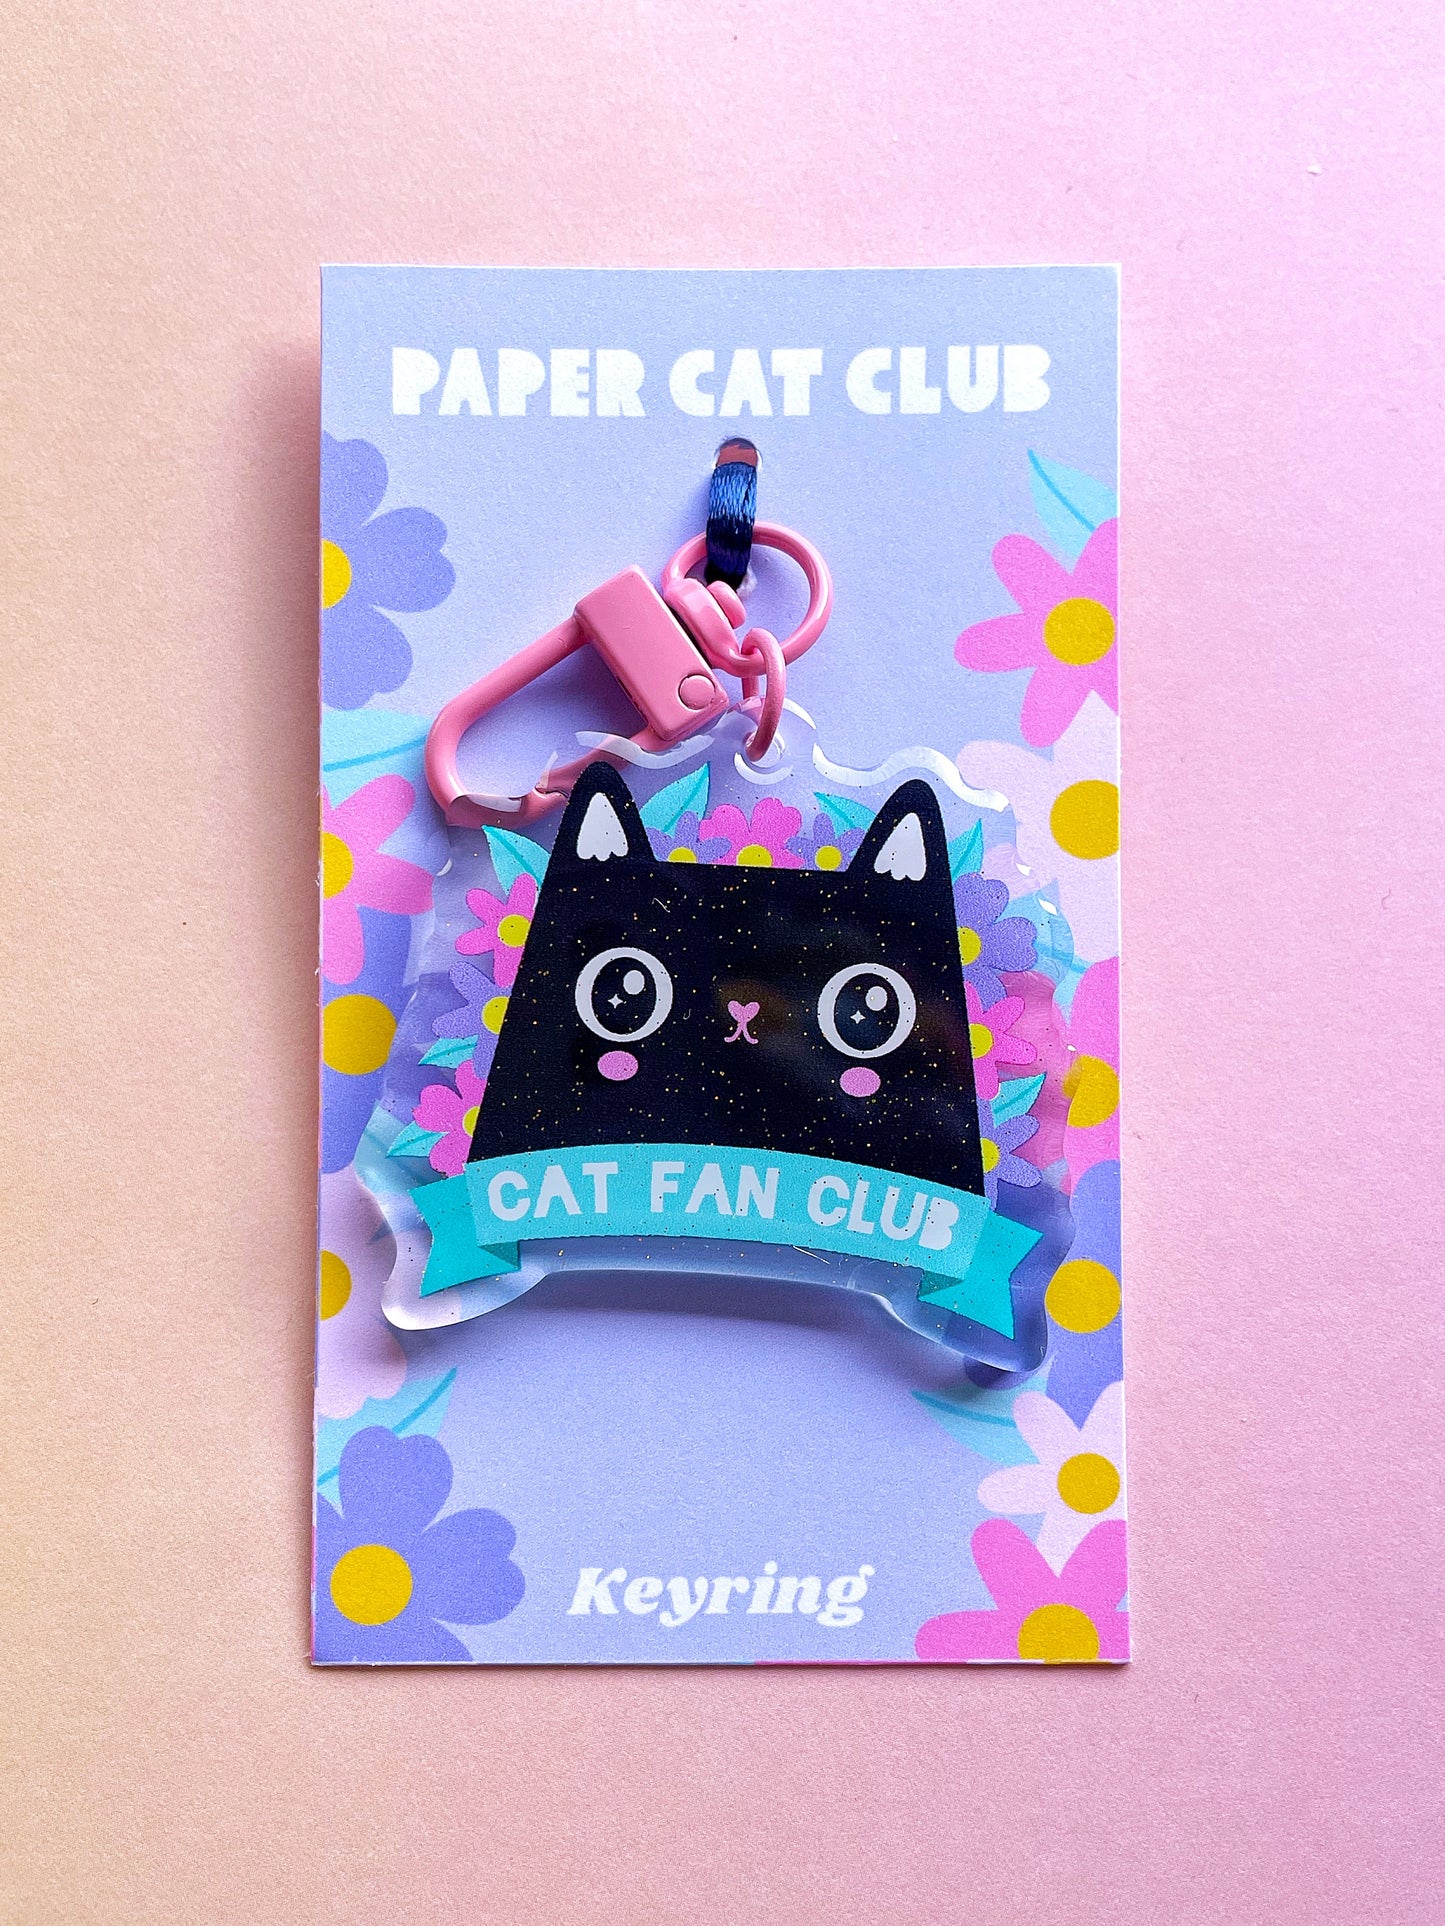 Cute Cat Fan Club Keychain